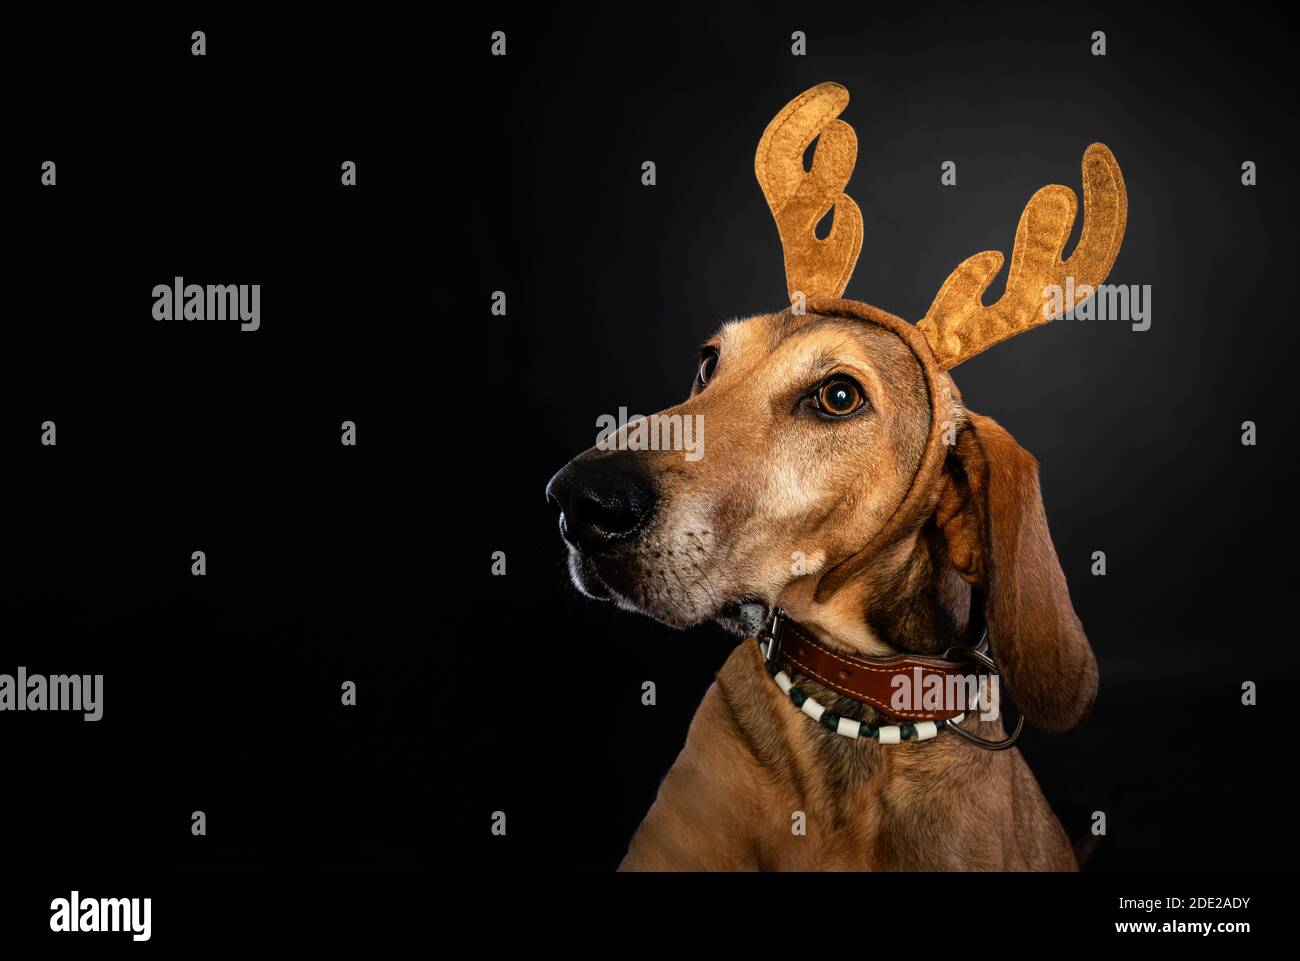 Christmas portrait of a brown Segugio dog wearing reindeer antlers. Stock Photo